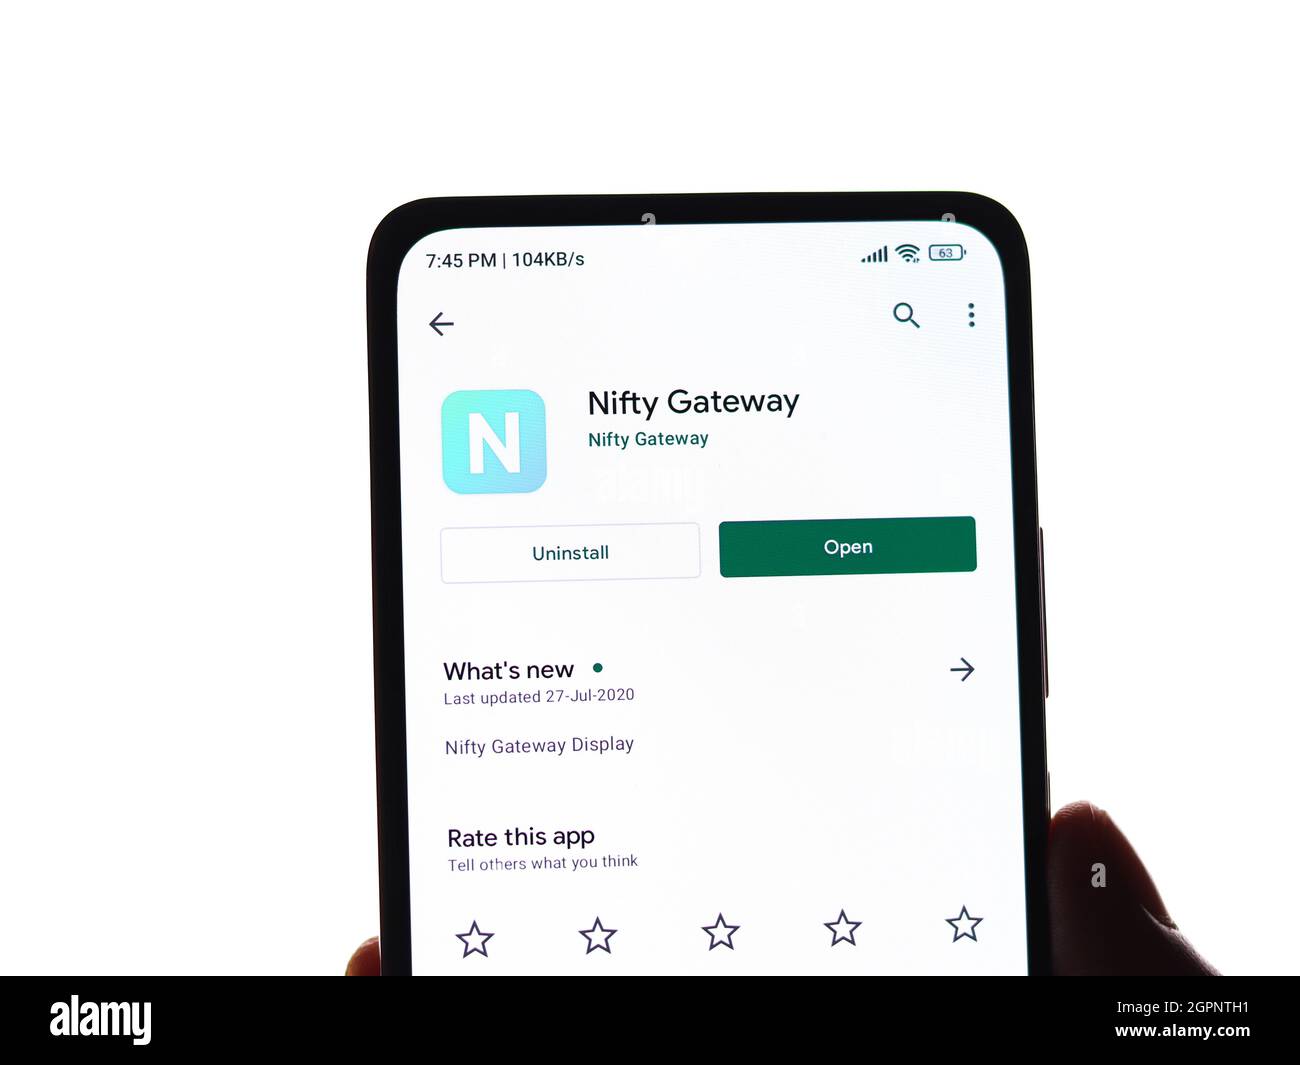 West Bangal, India - September 28, 2021 : Nifty Gateway logo on phone screen stock image. Stock Photo